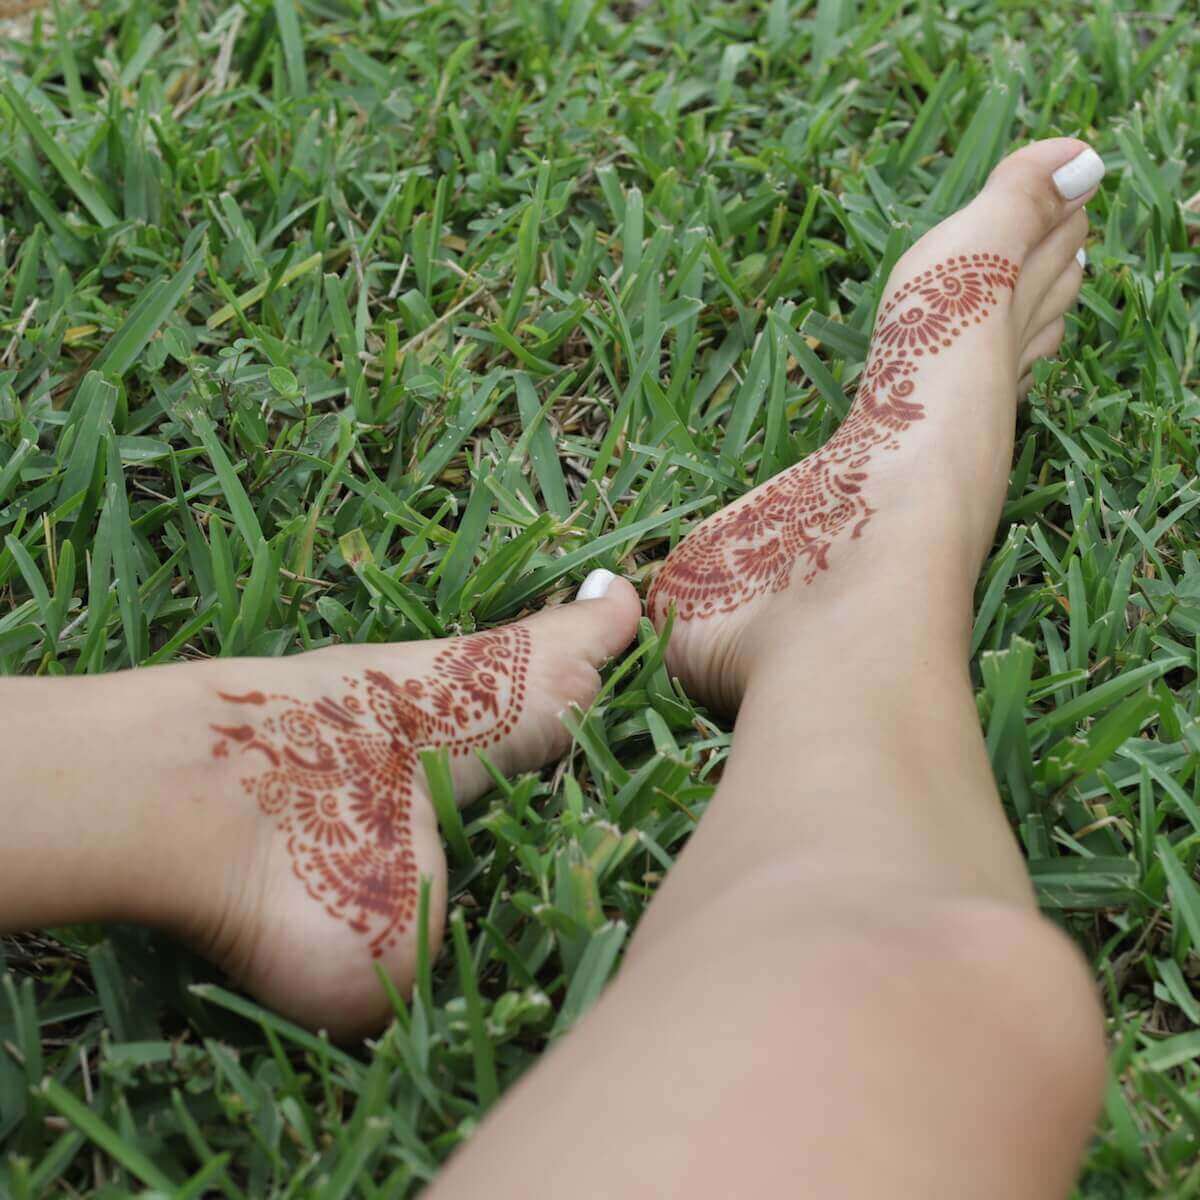 Fawn - henna design on feet in grass